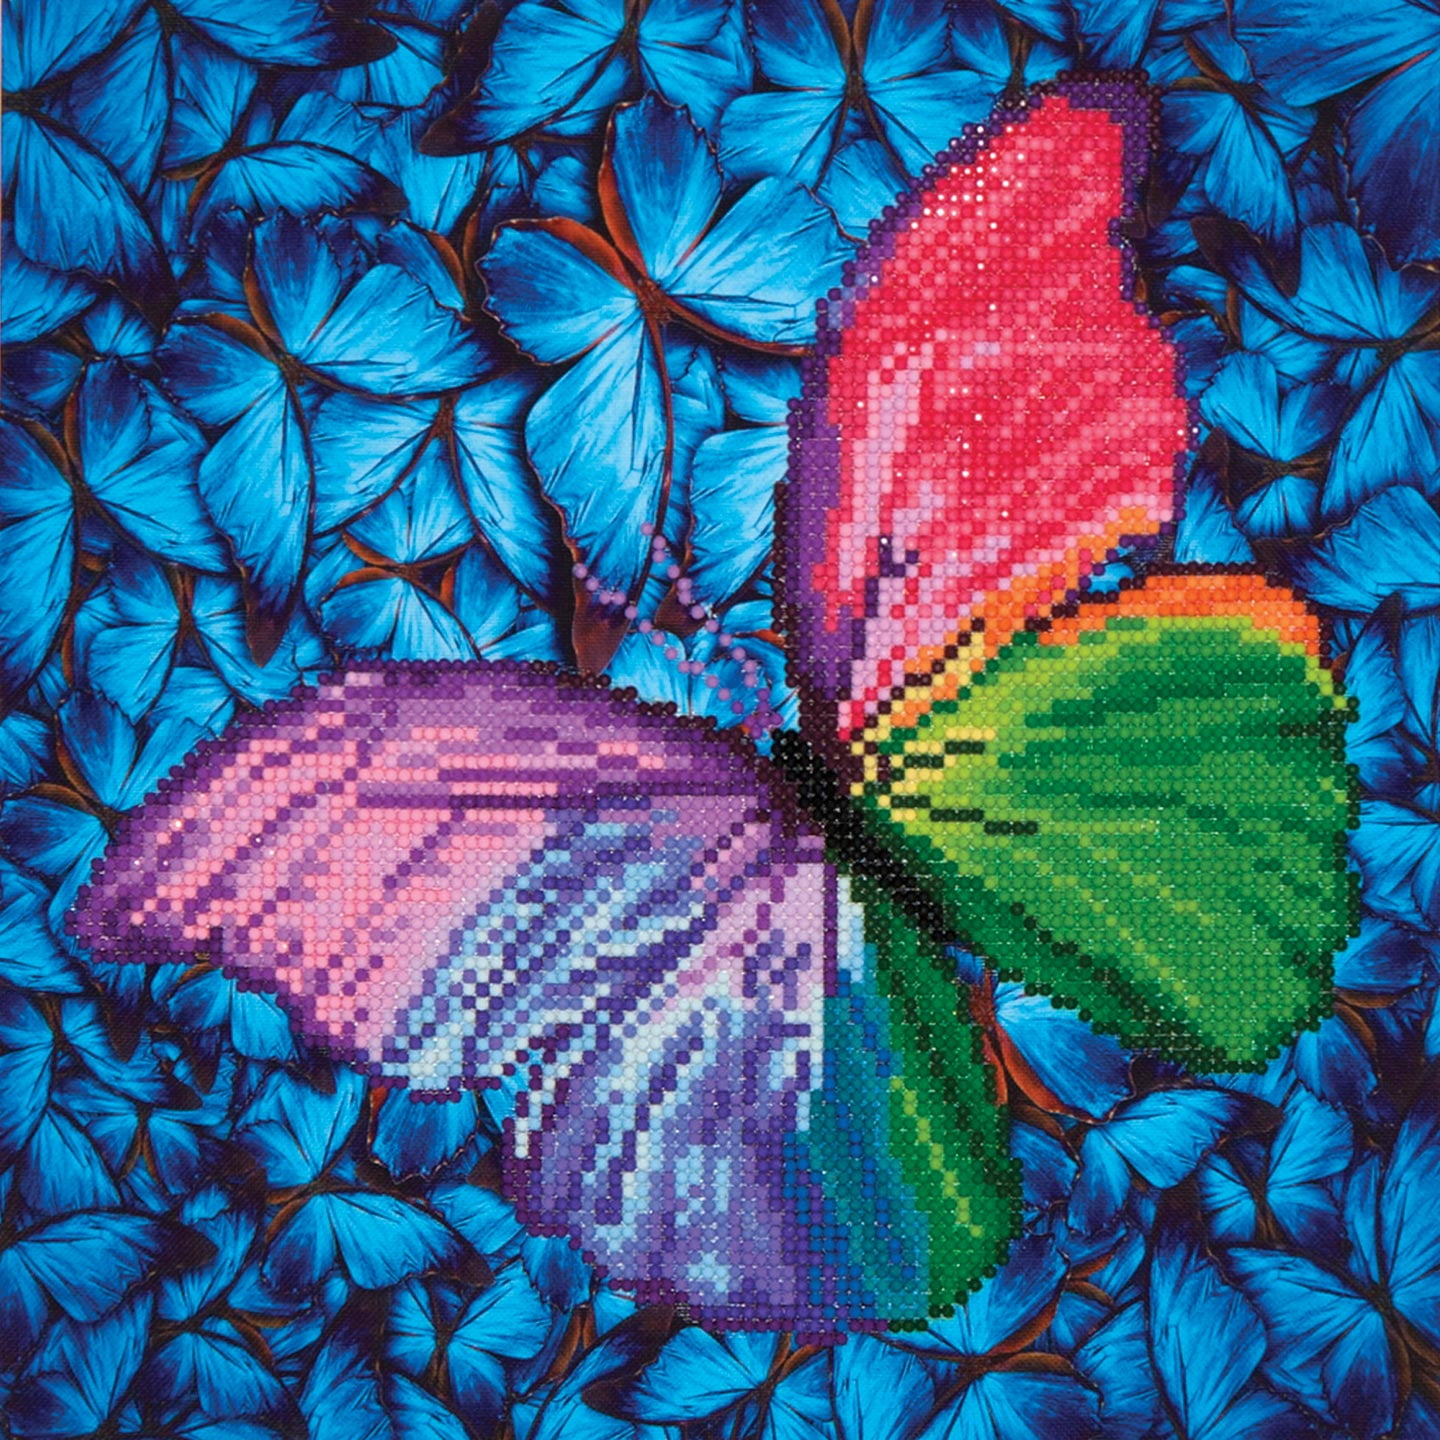 Colorful Dream Catcher - 5D Diamond Paintings - DiamondByNumbers